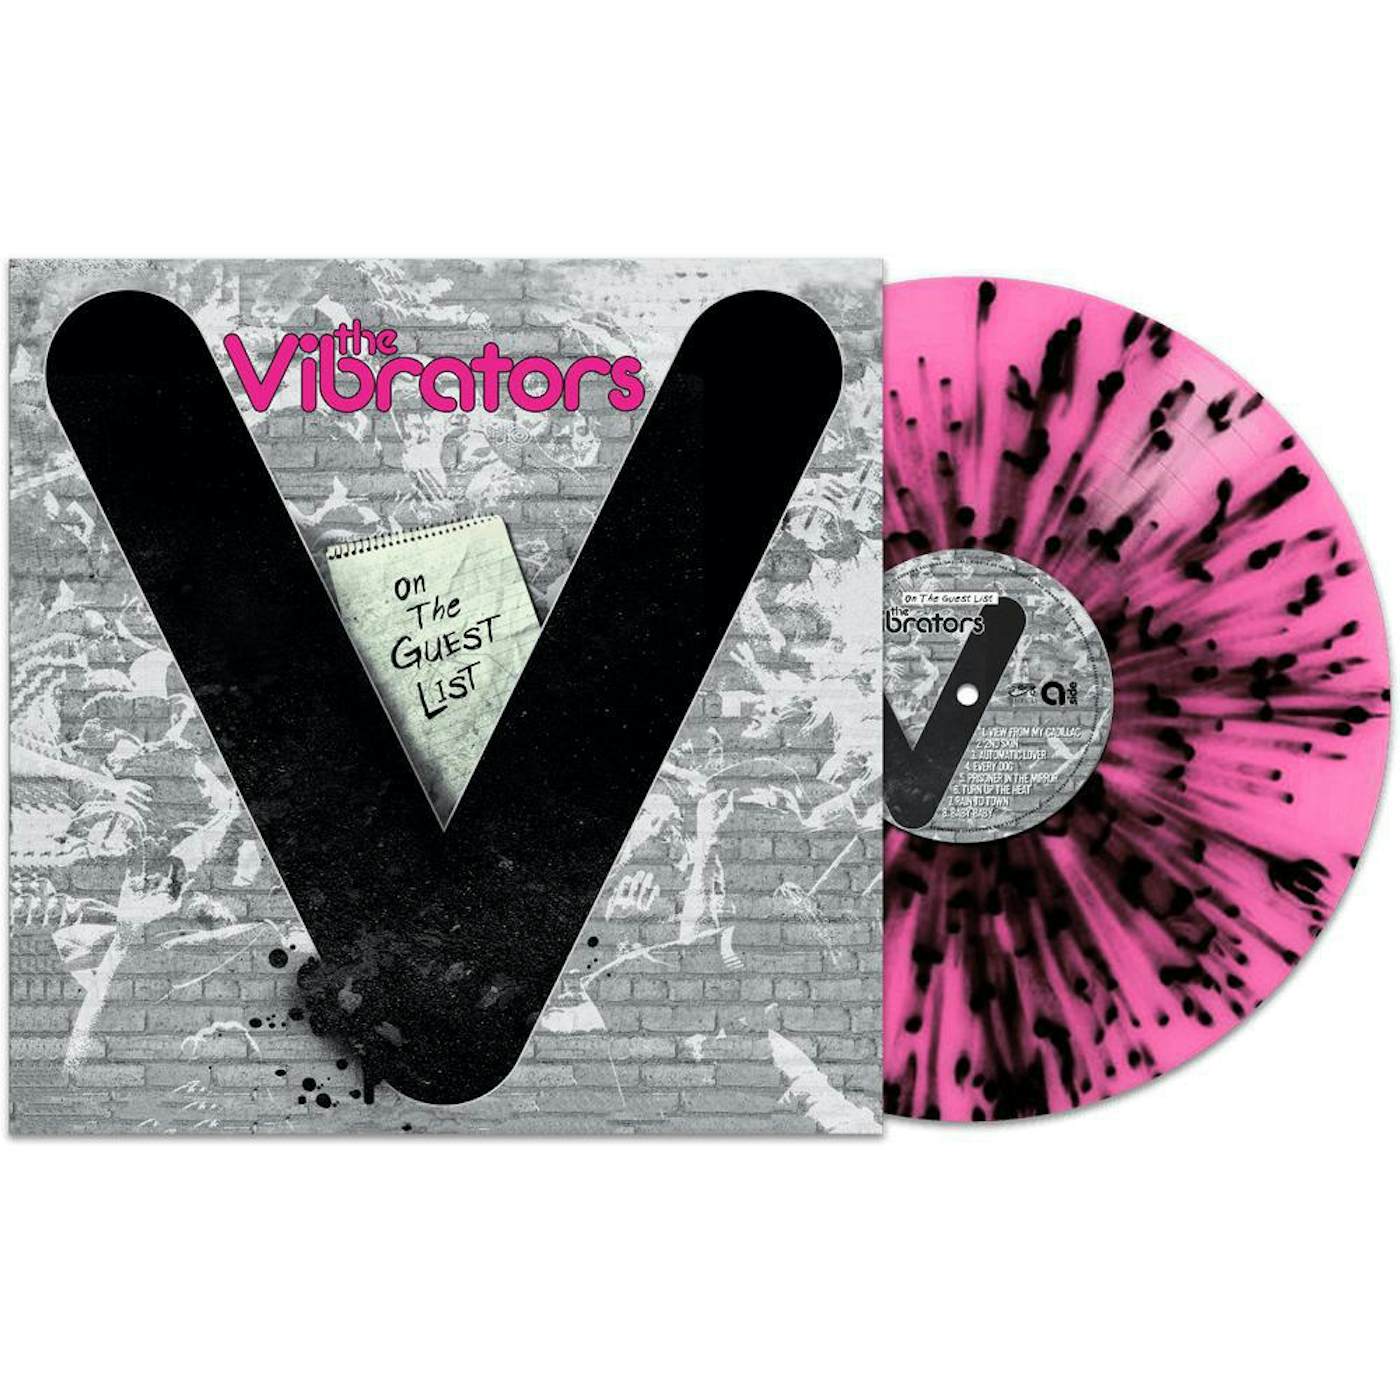 The Vibrators On The Guest List (Pink/Black Splatter Vinyl Record)